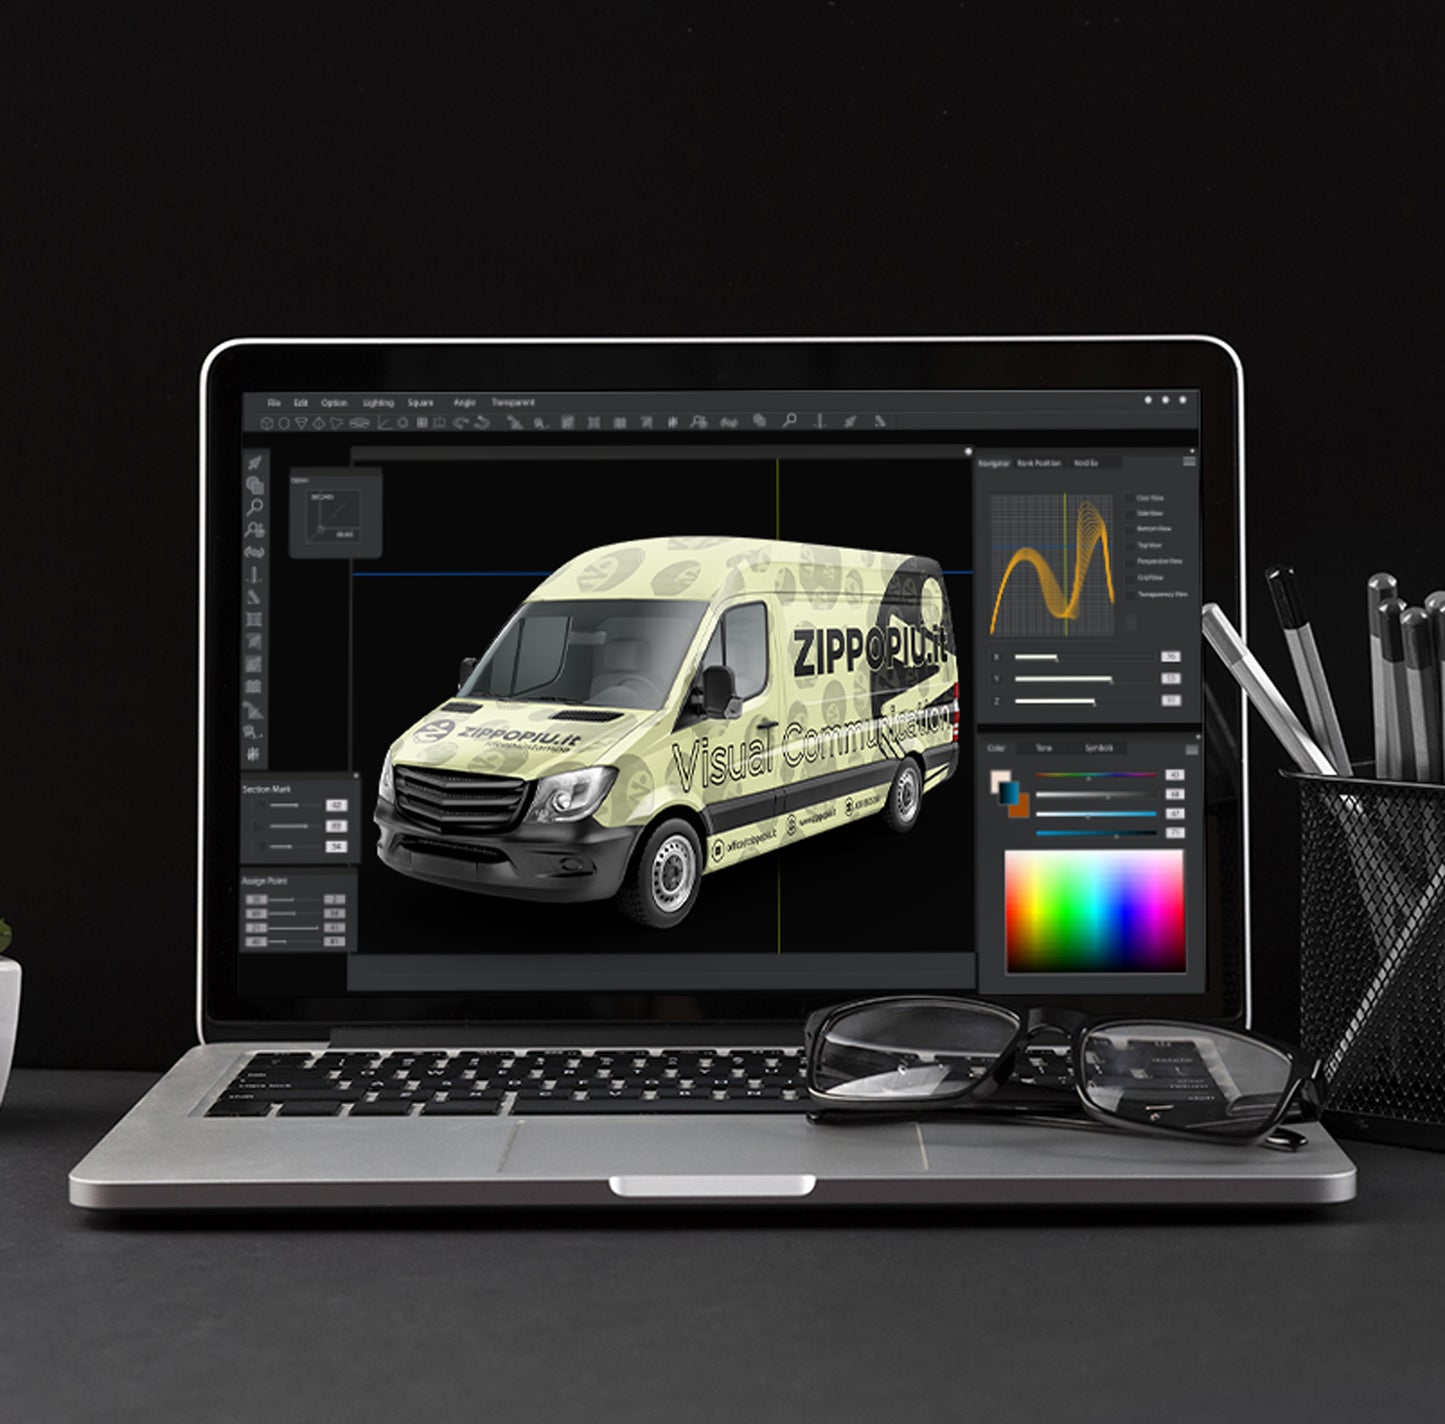 Graphic Design Service Van 5 "INTEGRALE"